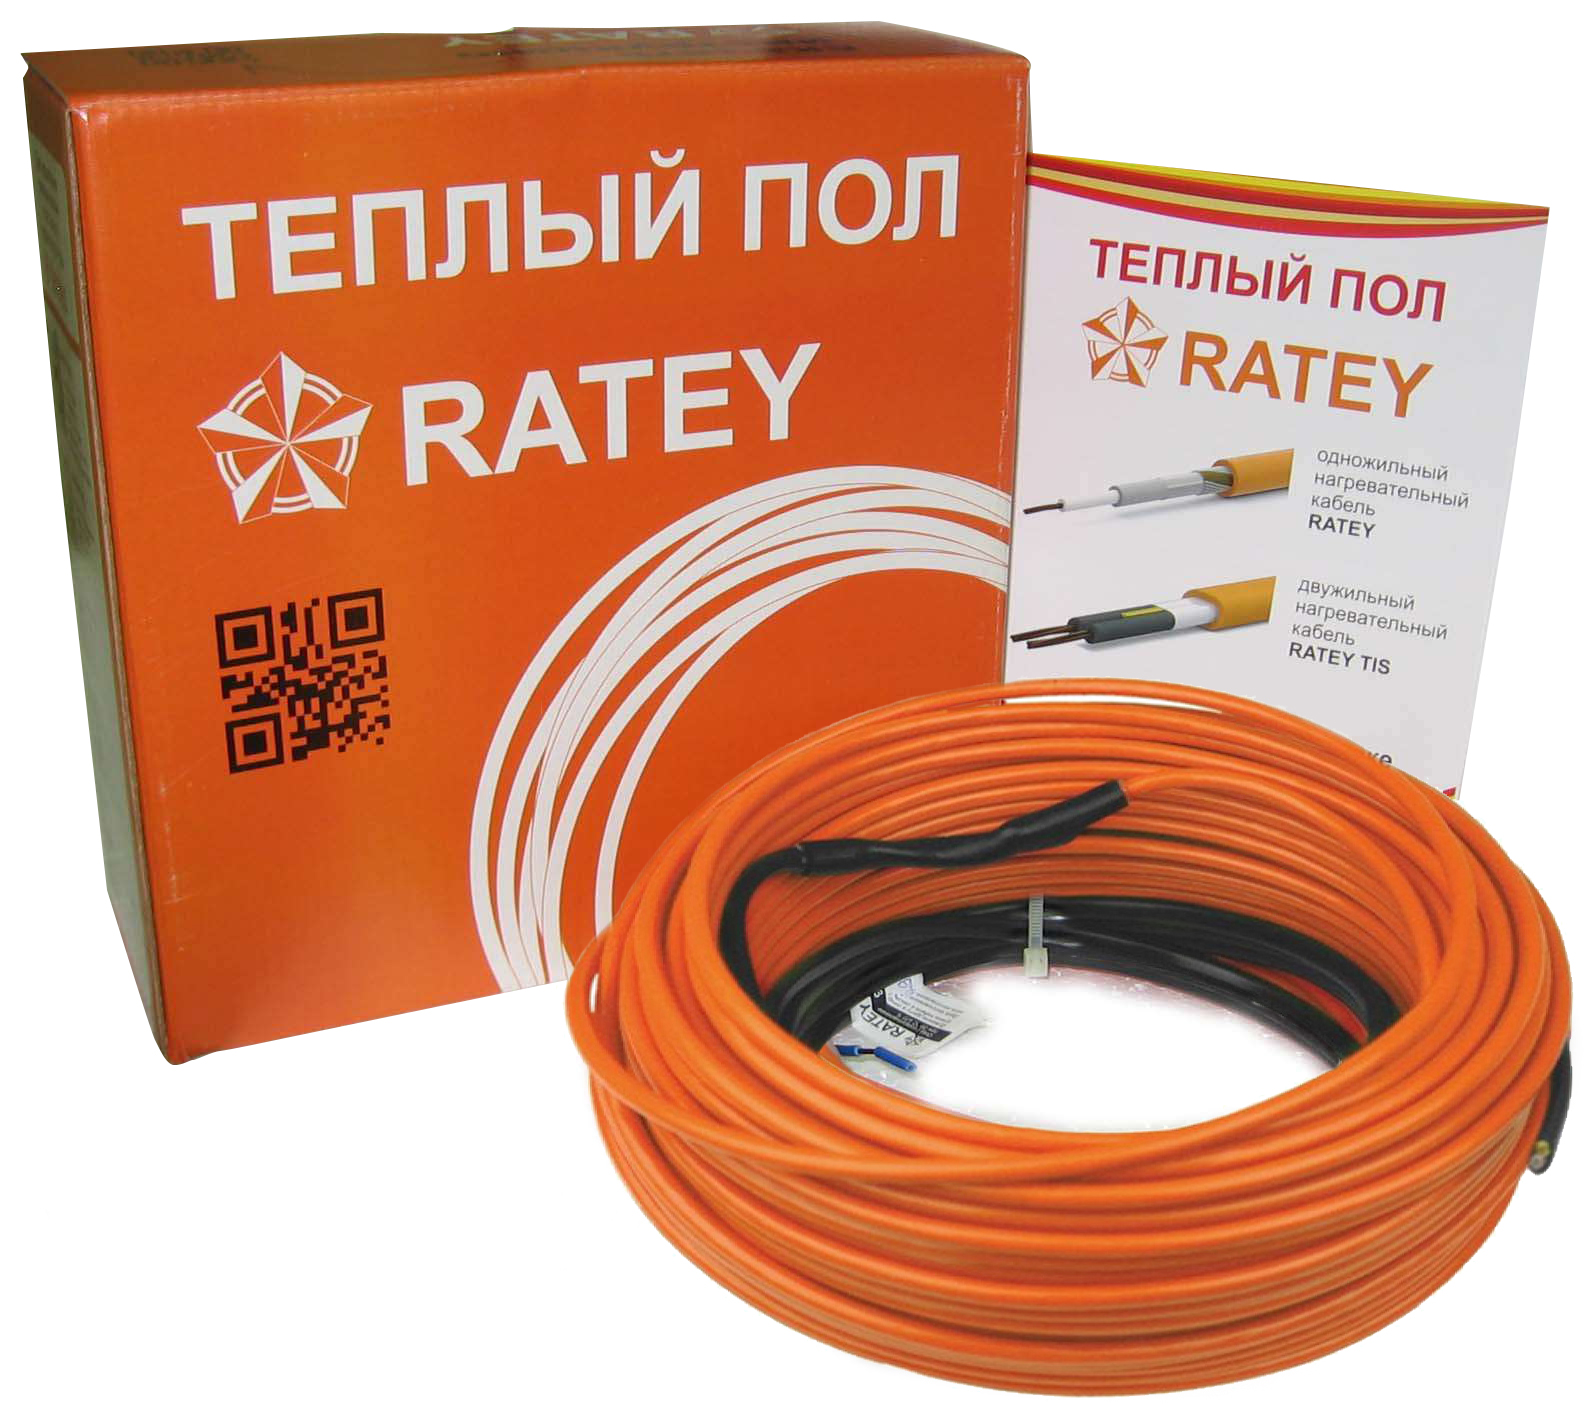 Электрический теплый пол Ratey RD1 2.400